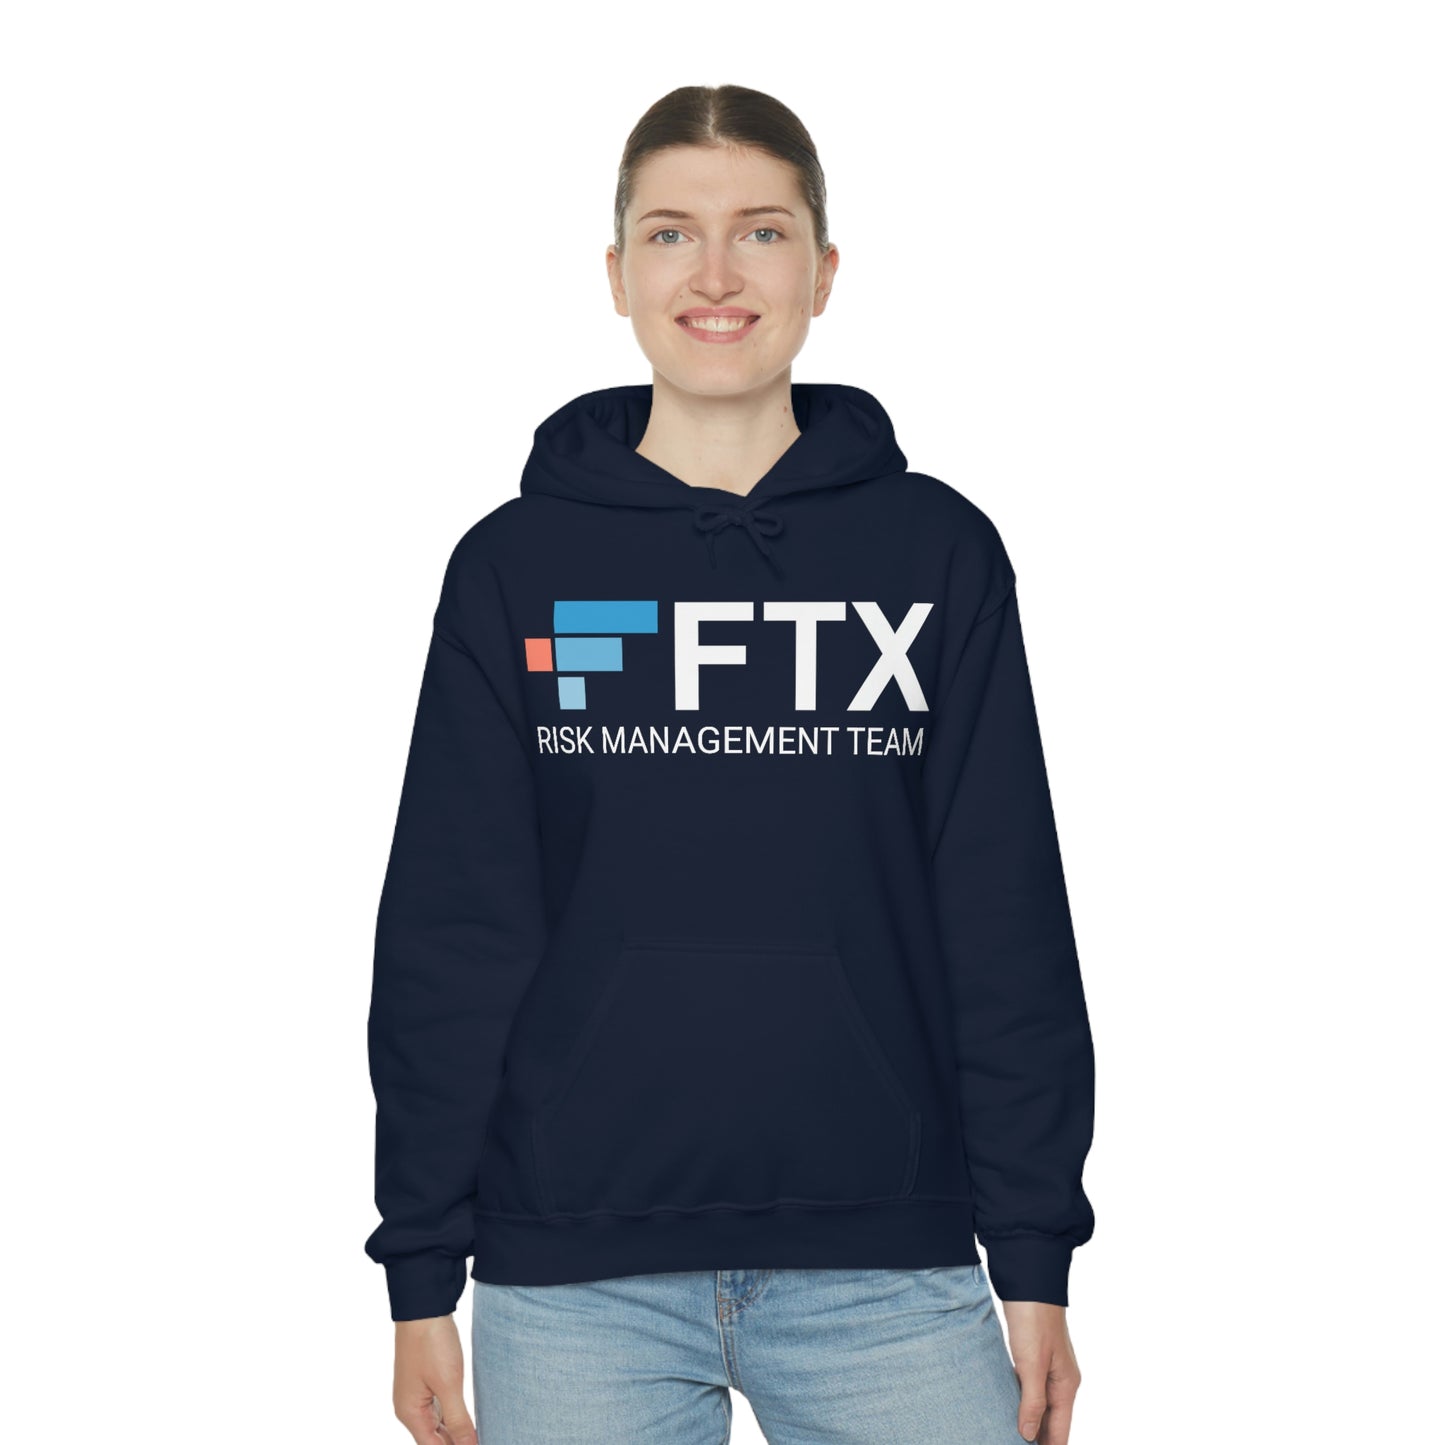 ftx risk management team hoodie BIG FTX LOGO